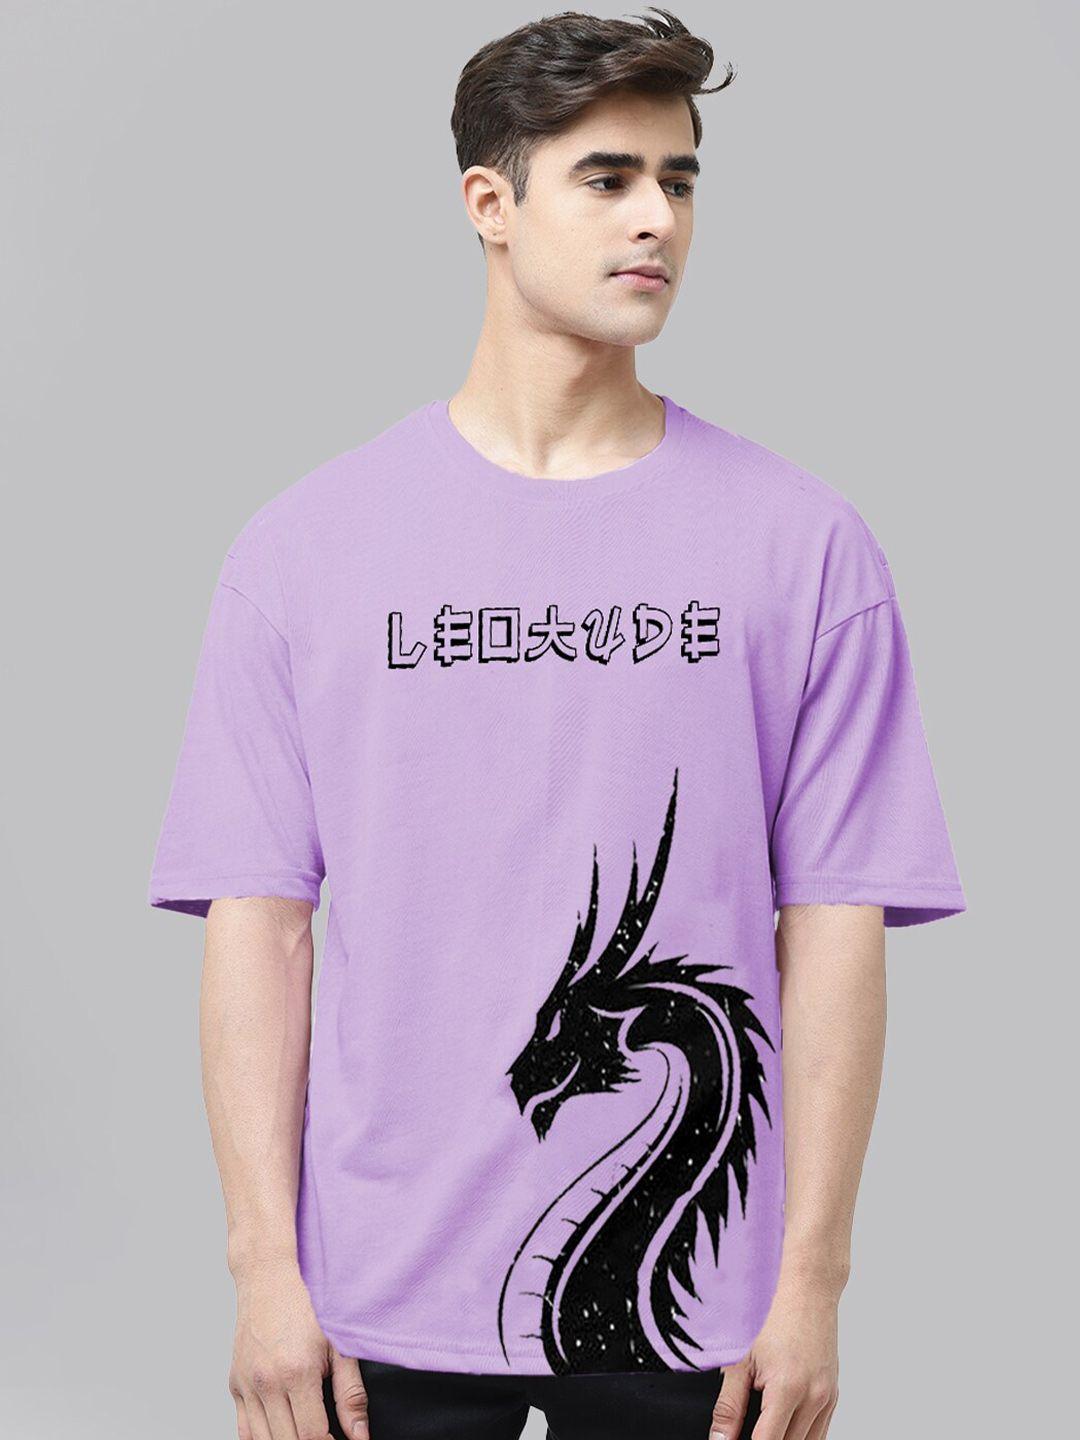 leotude men purple printed pockets t-shirt